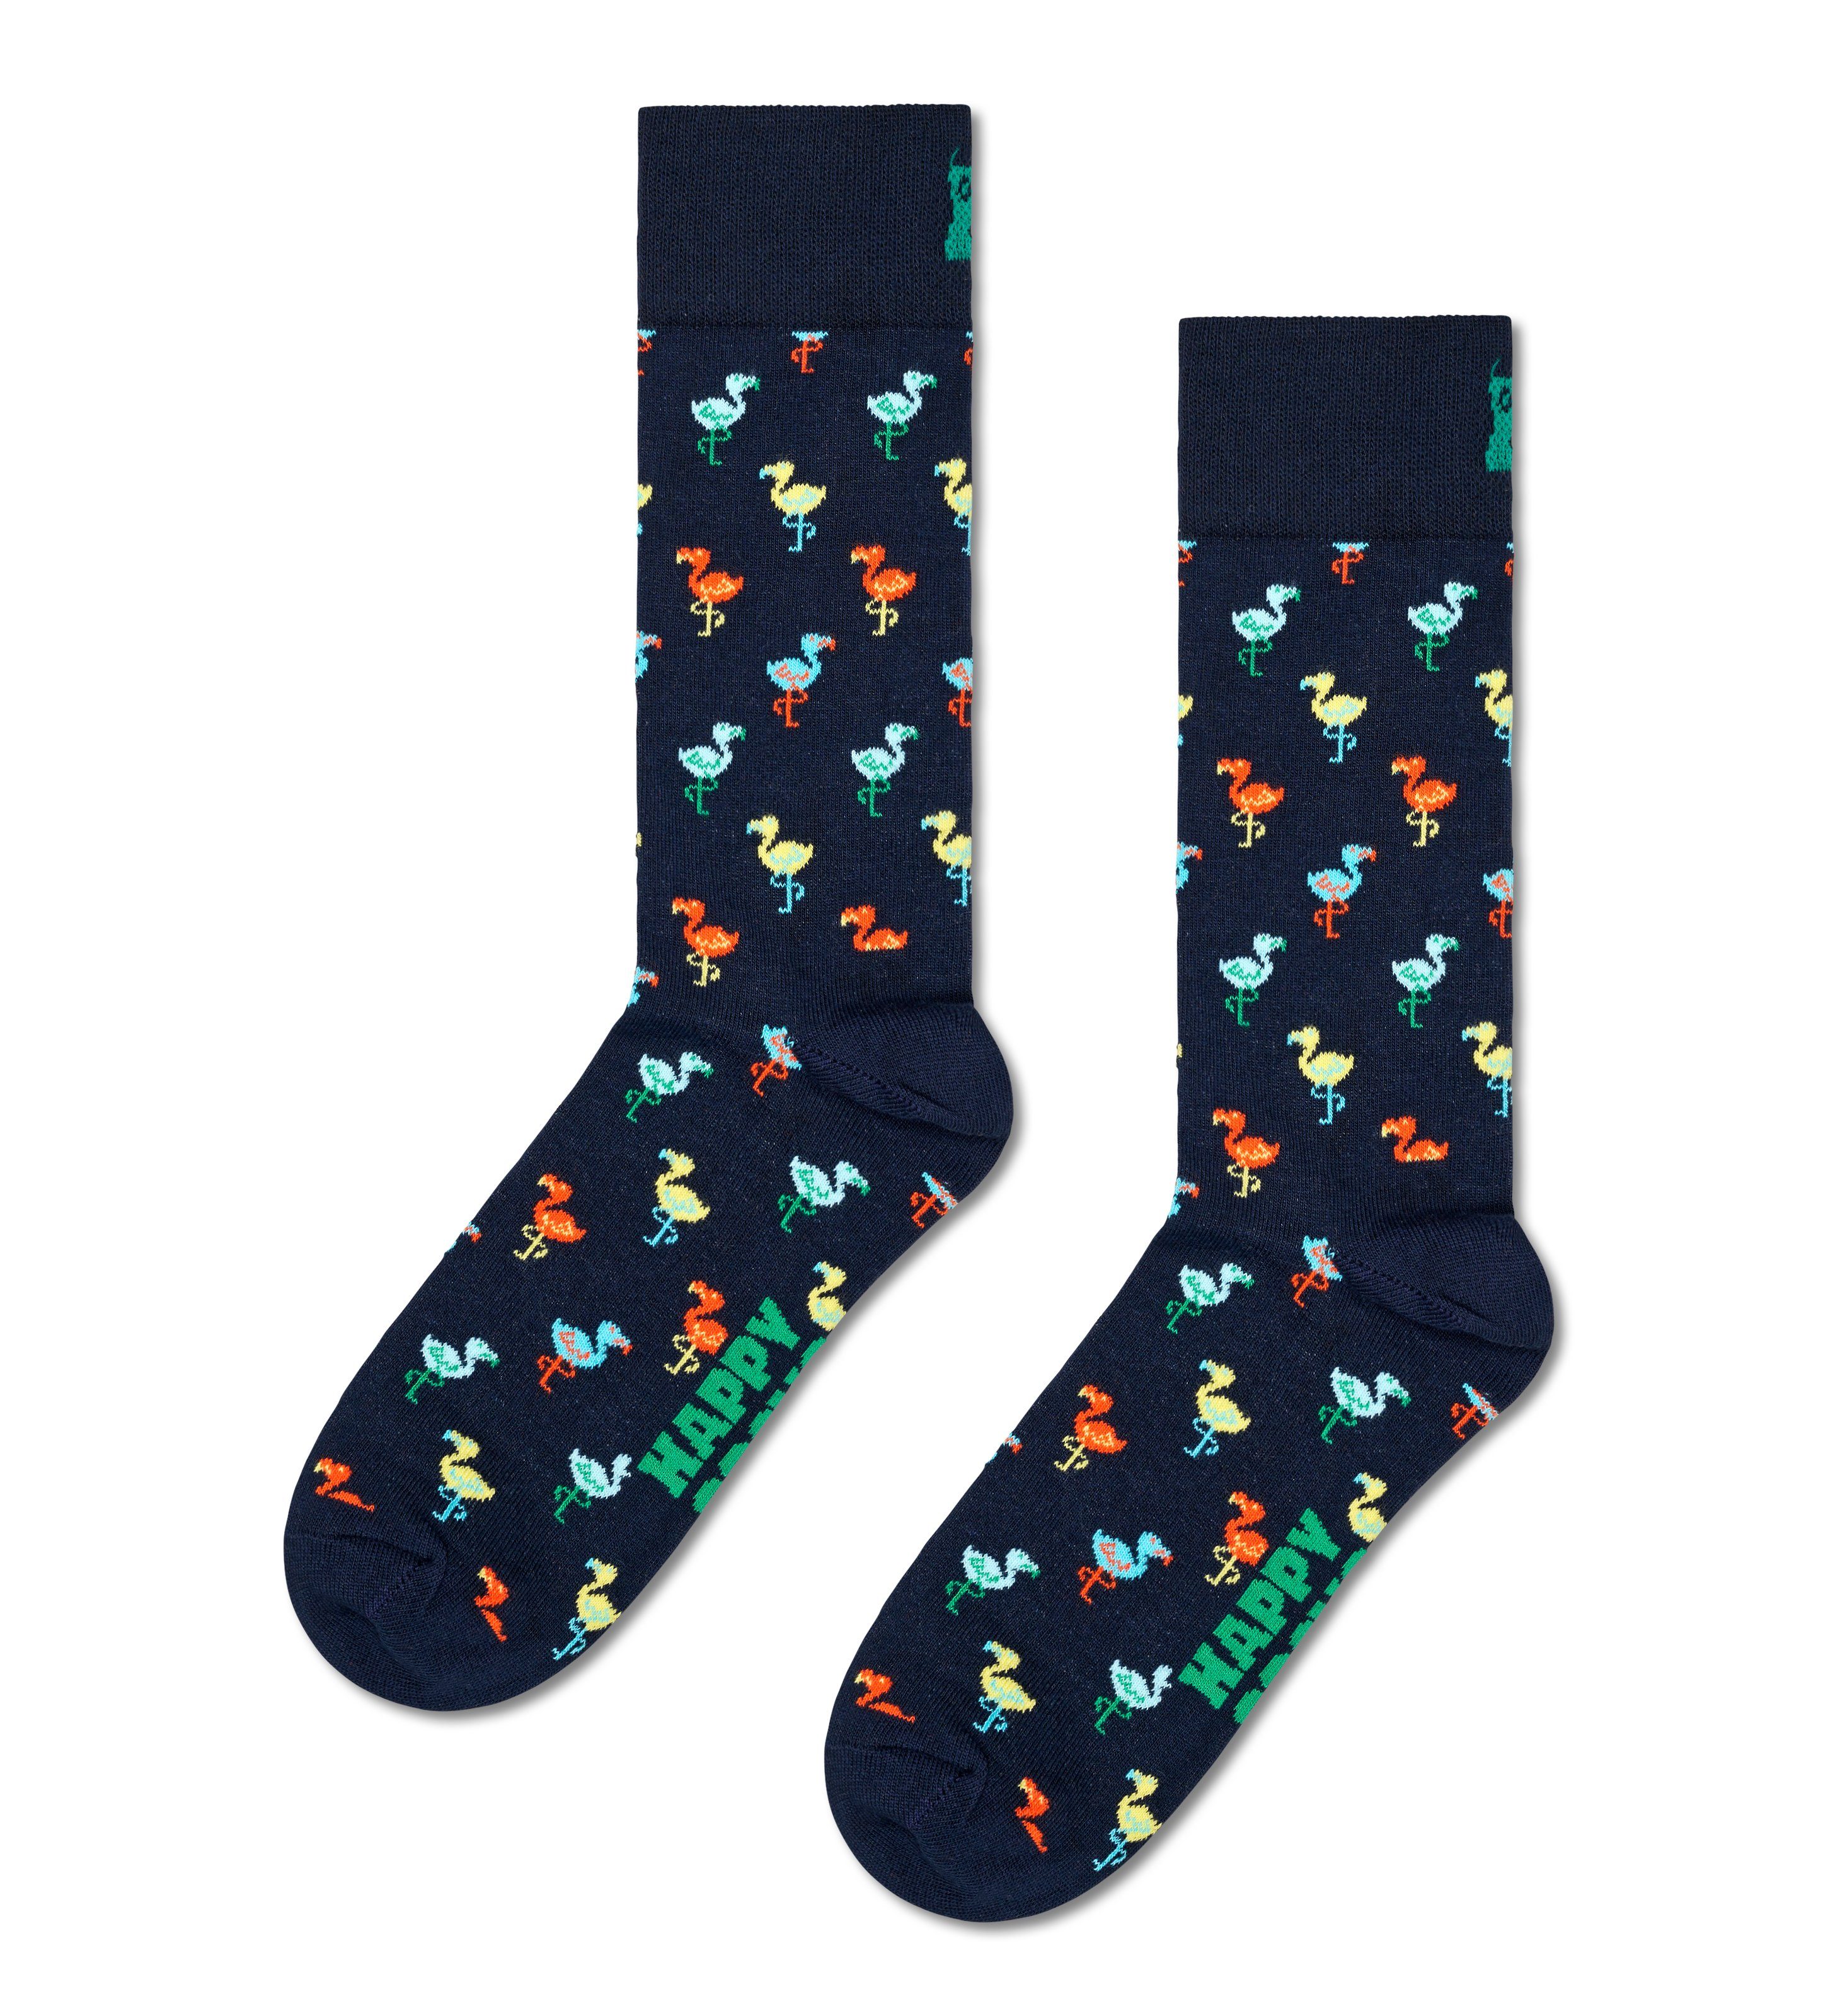 Happy Socks Sokken Navy Gift Set